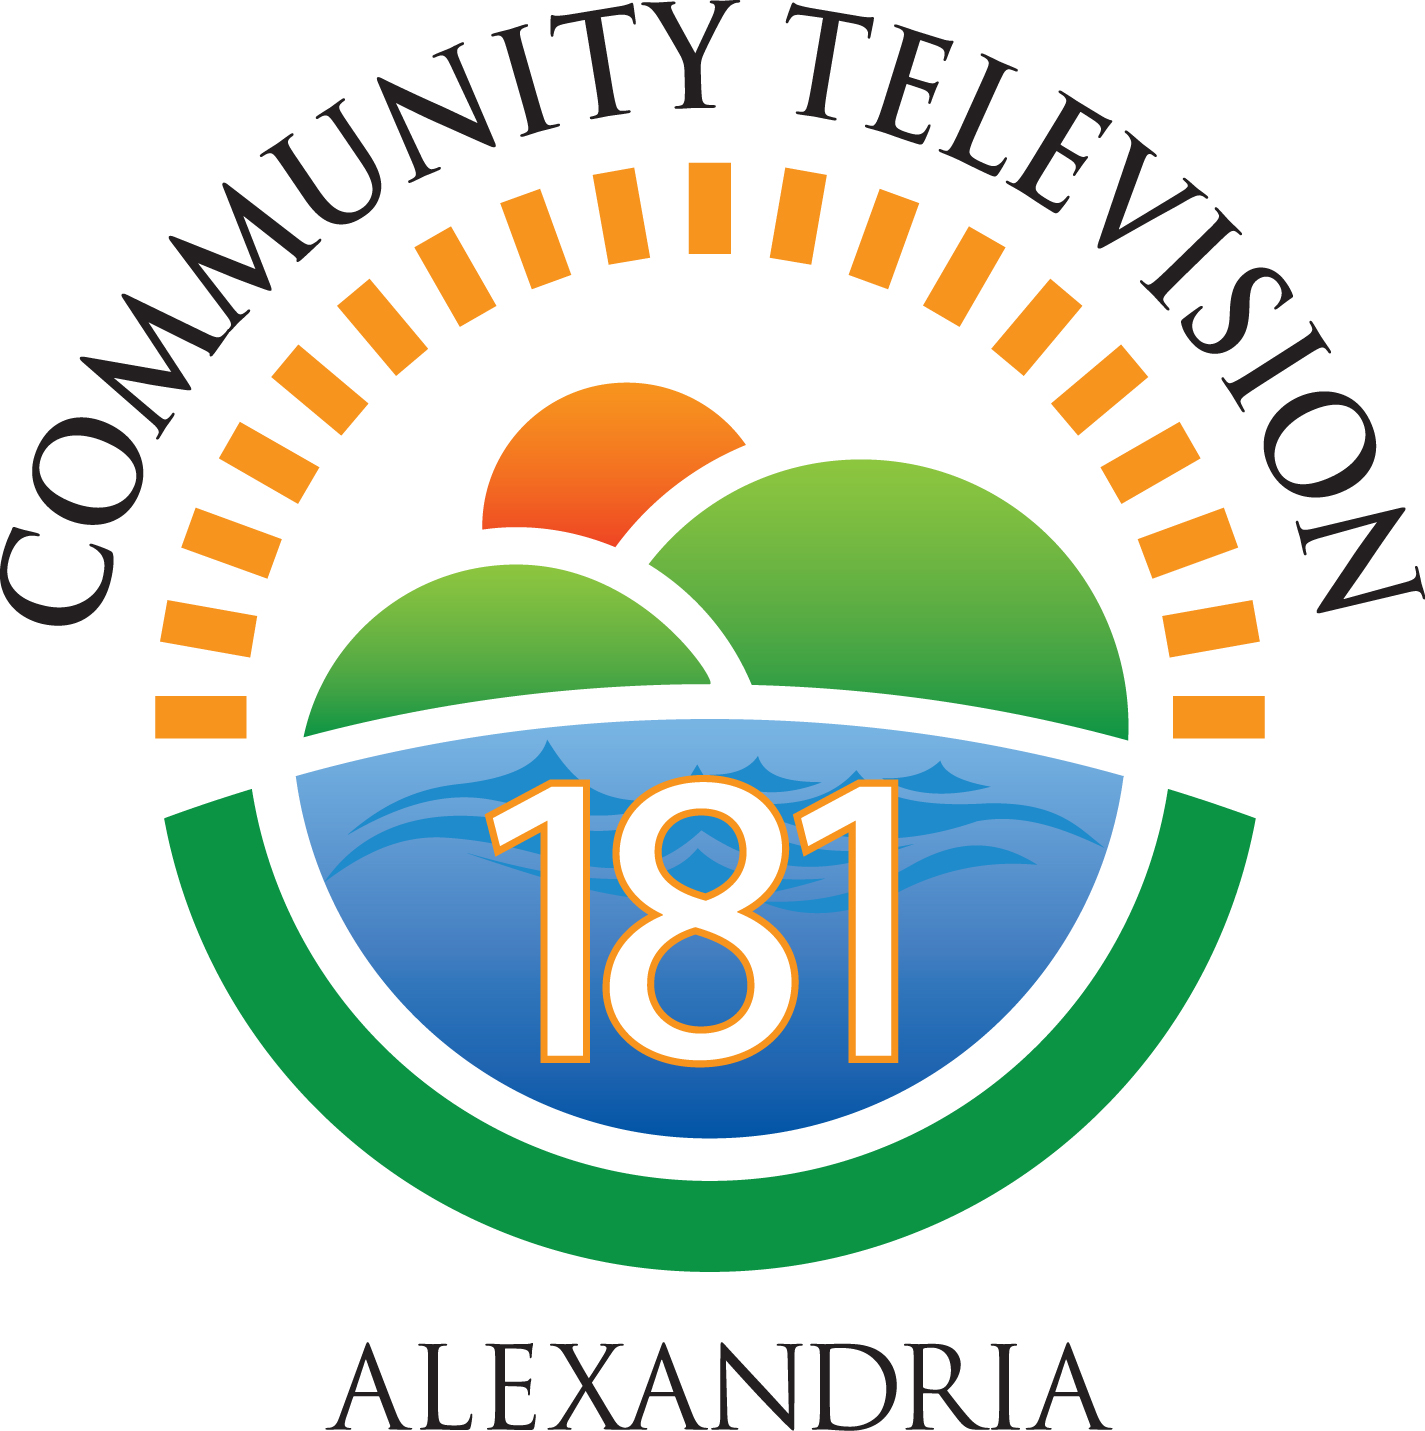 Community Television 181